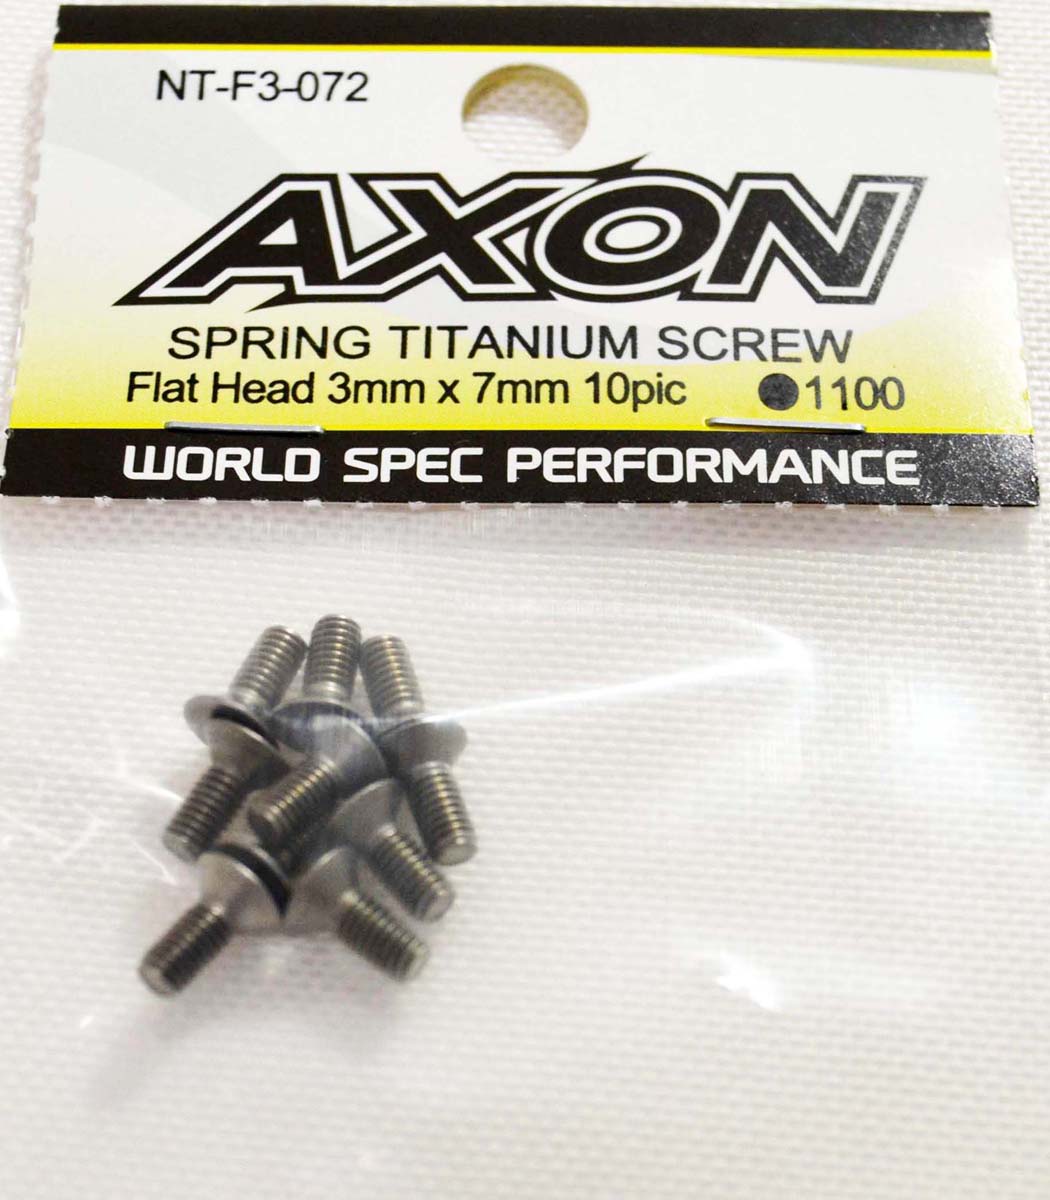 AXON SPRING TITANIUM SCREW (Flat Head 3mm x 7mm 10pic)【NT-F3-072】 ラジコンパーツ